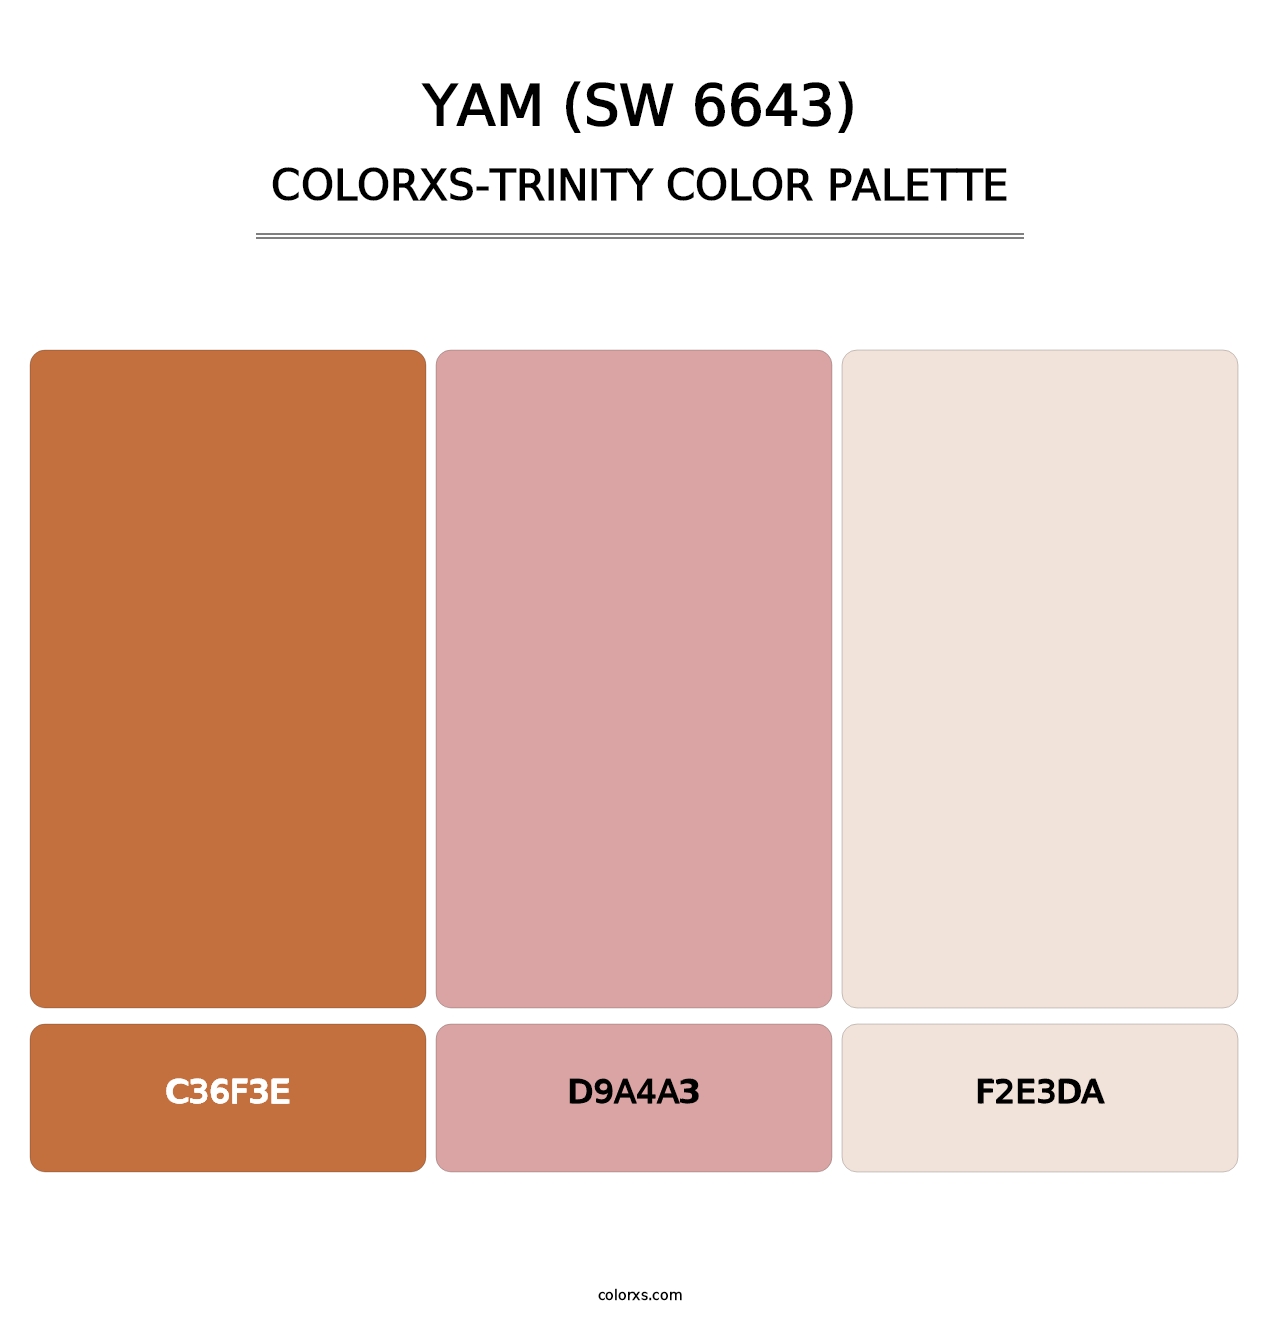 Yam (SW 6643) - Colorxs Trinity Palette